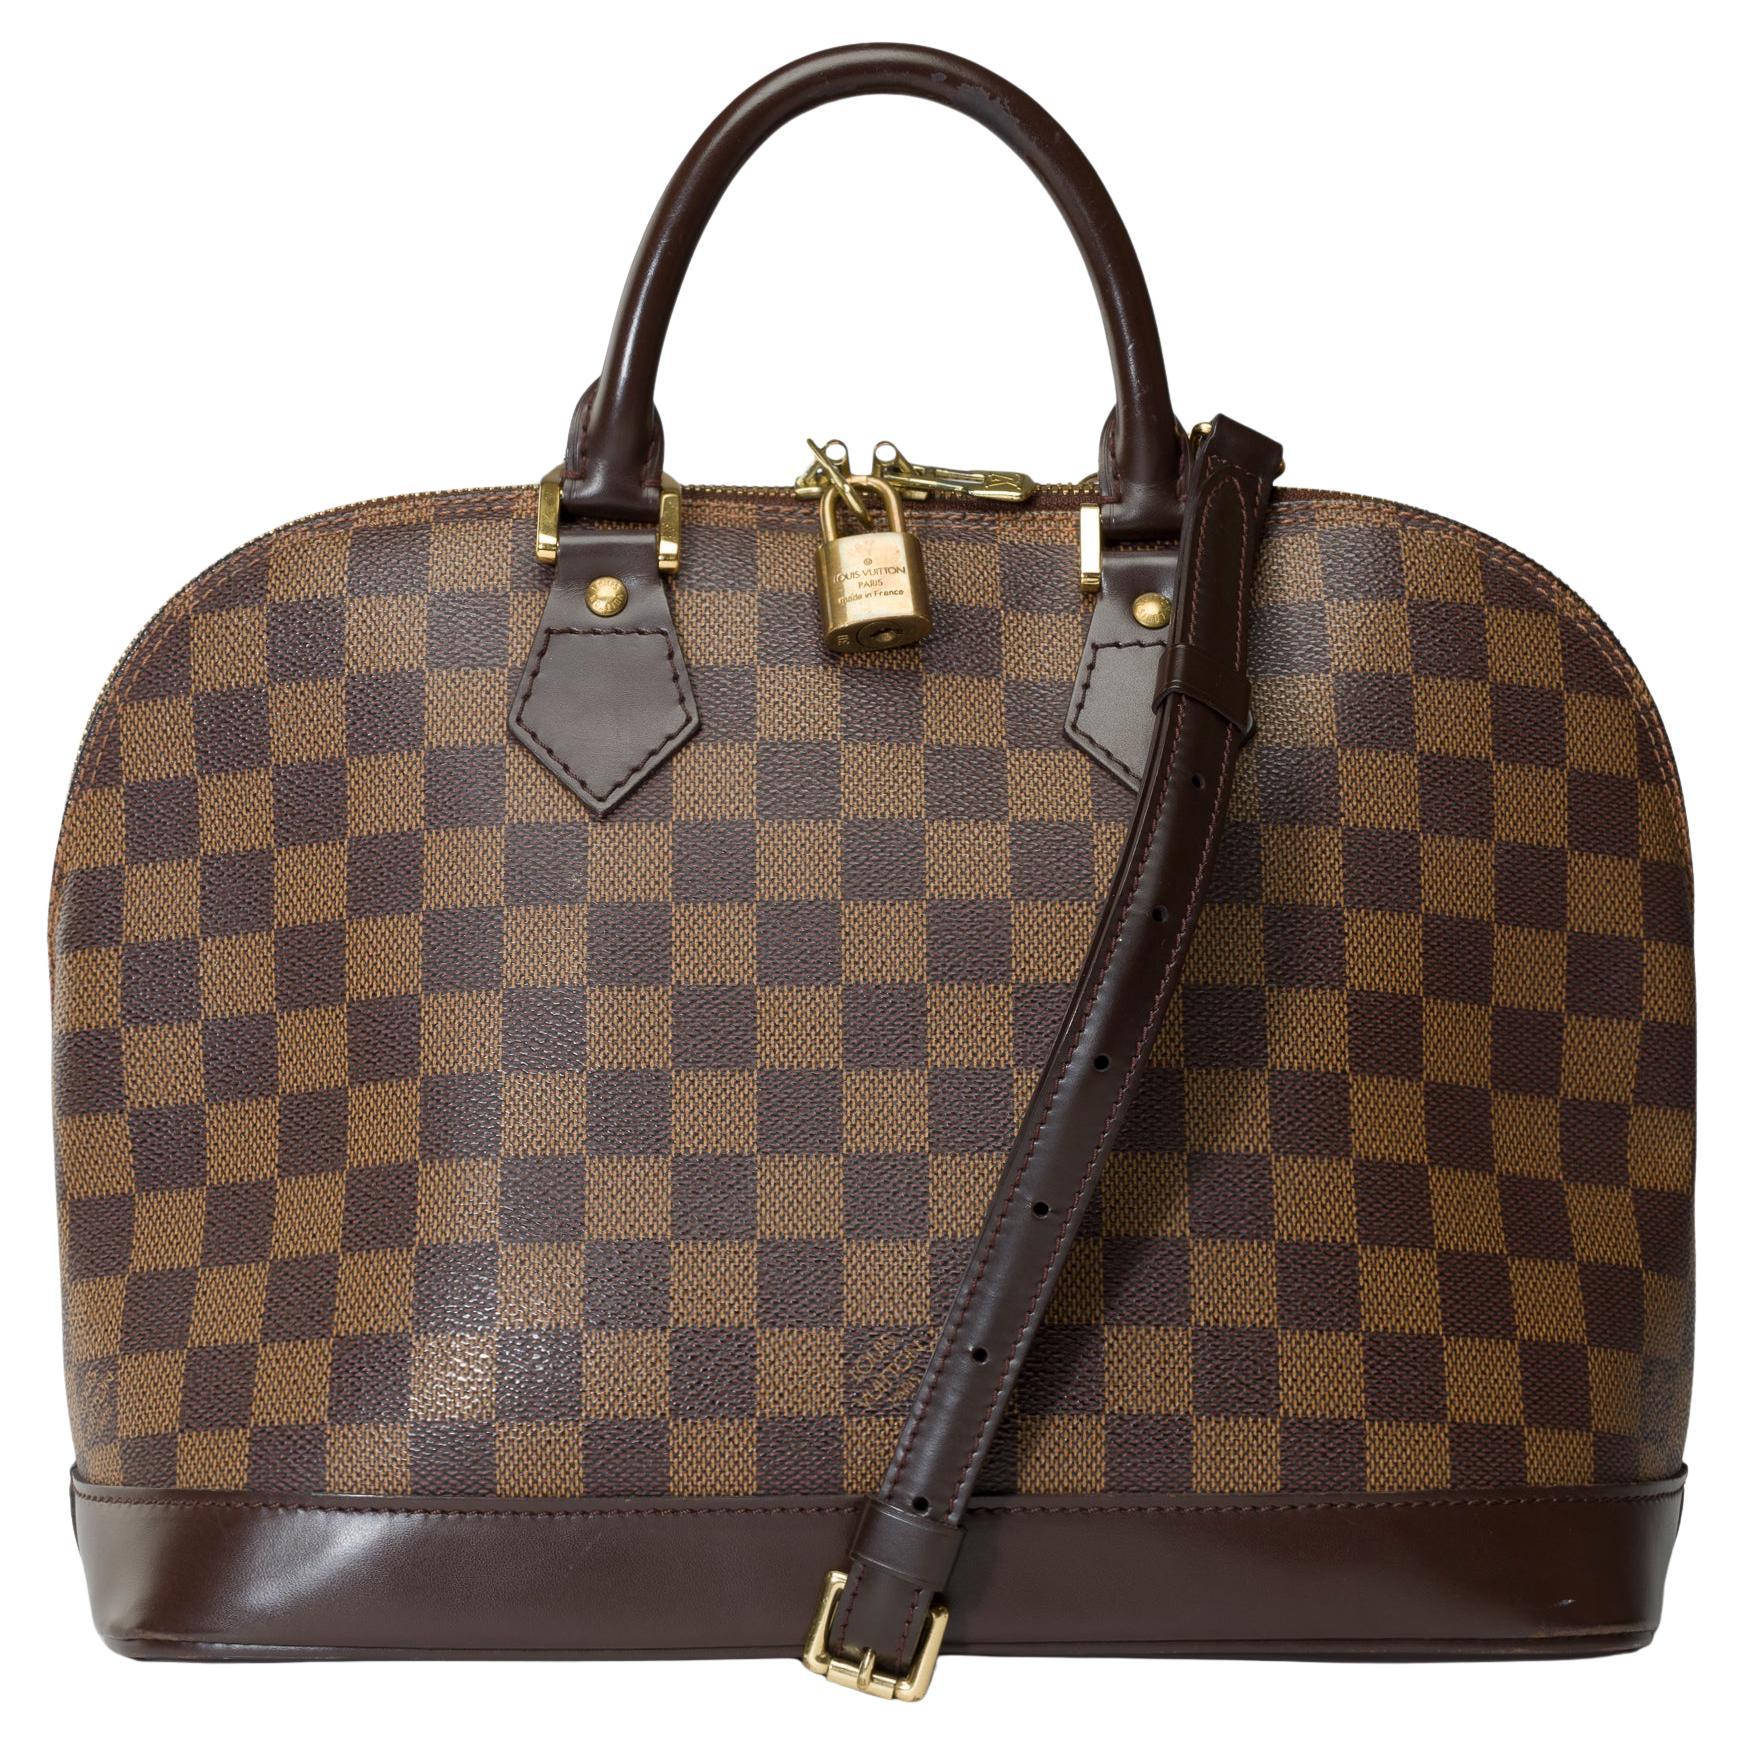 Lovely Louis Vuitton Alma handbag strap in brown damier canvas, GHW For Sale